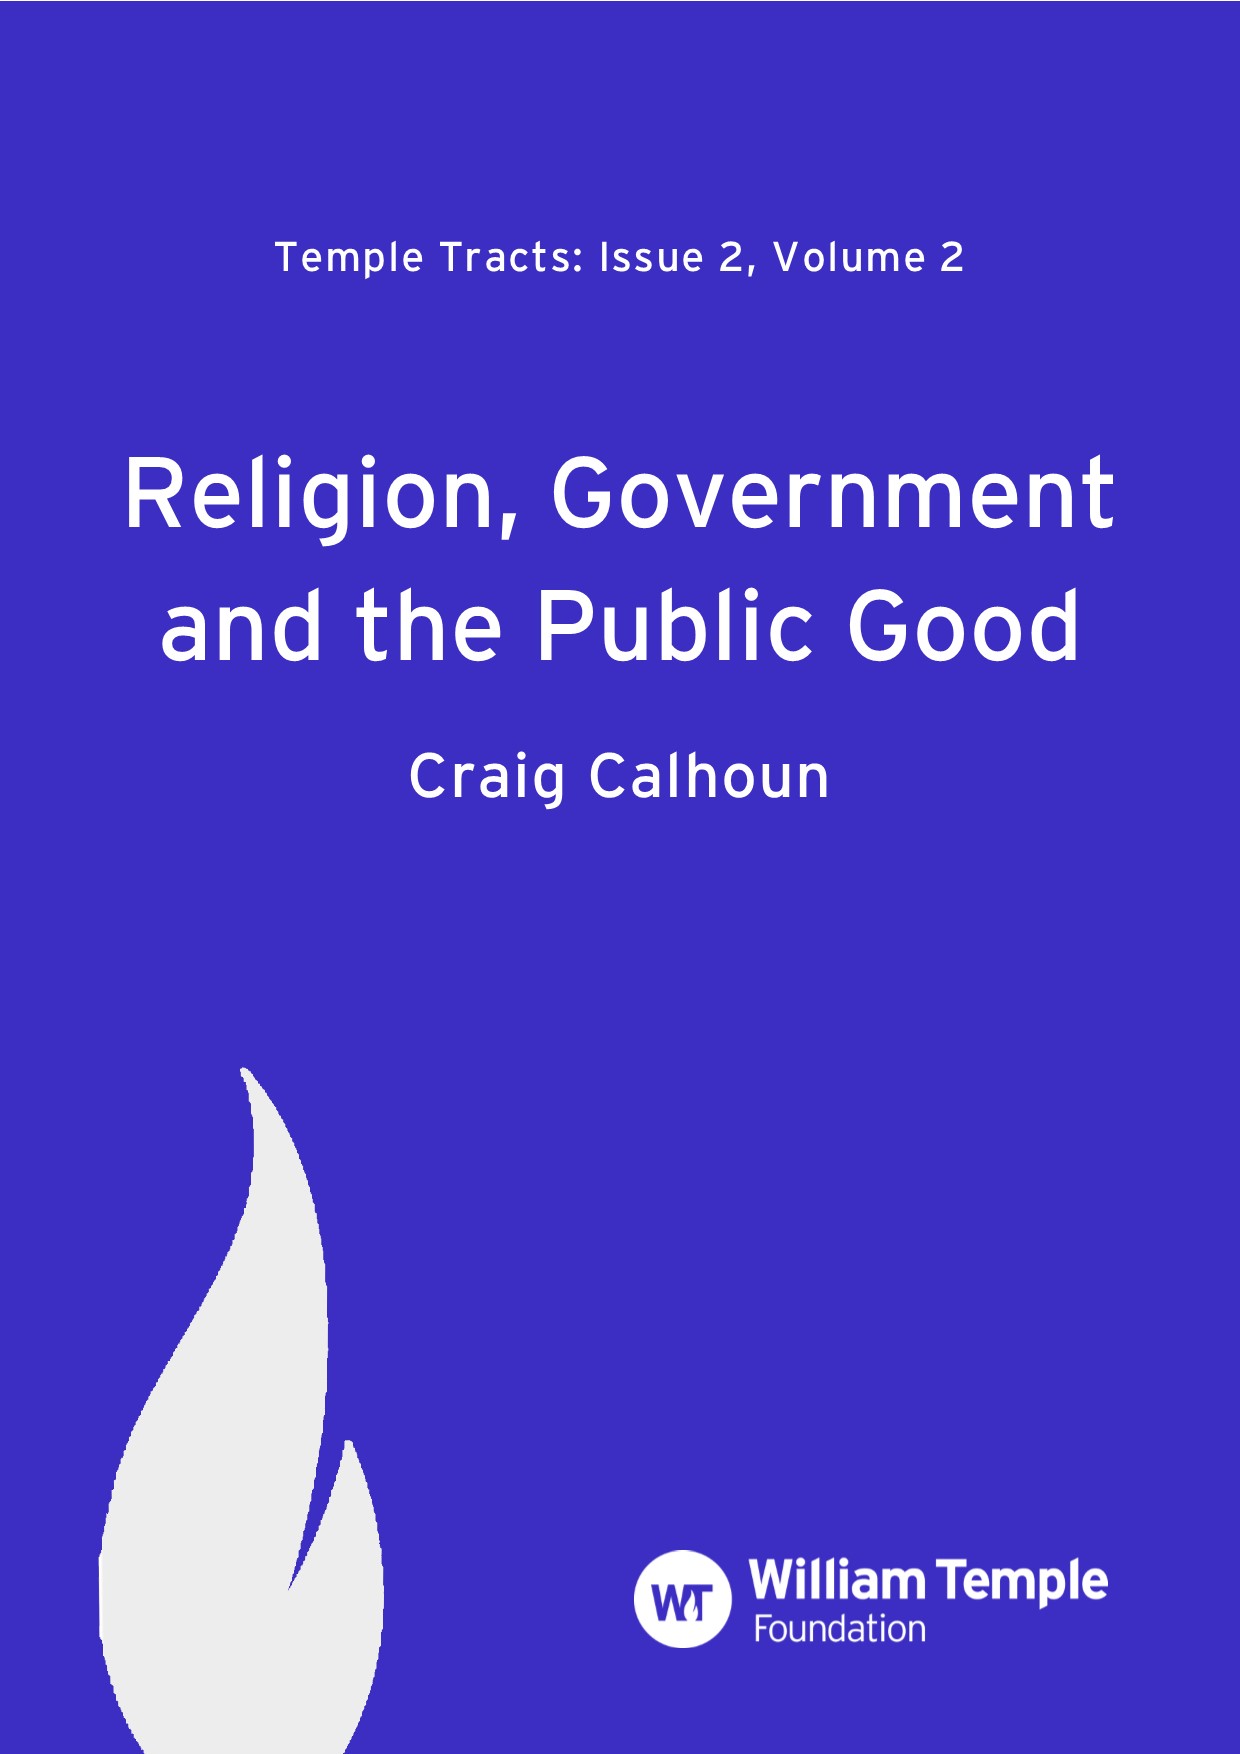 craig calhoun on religion